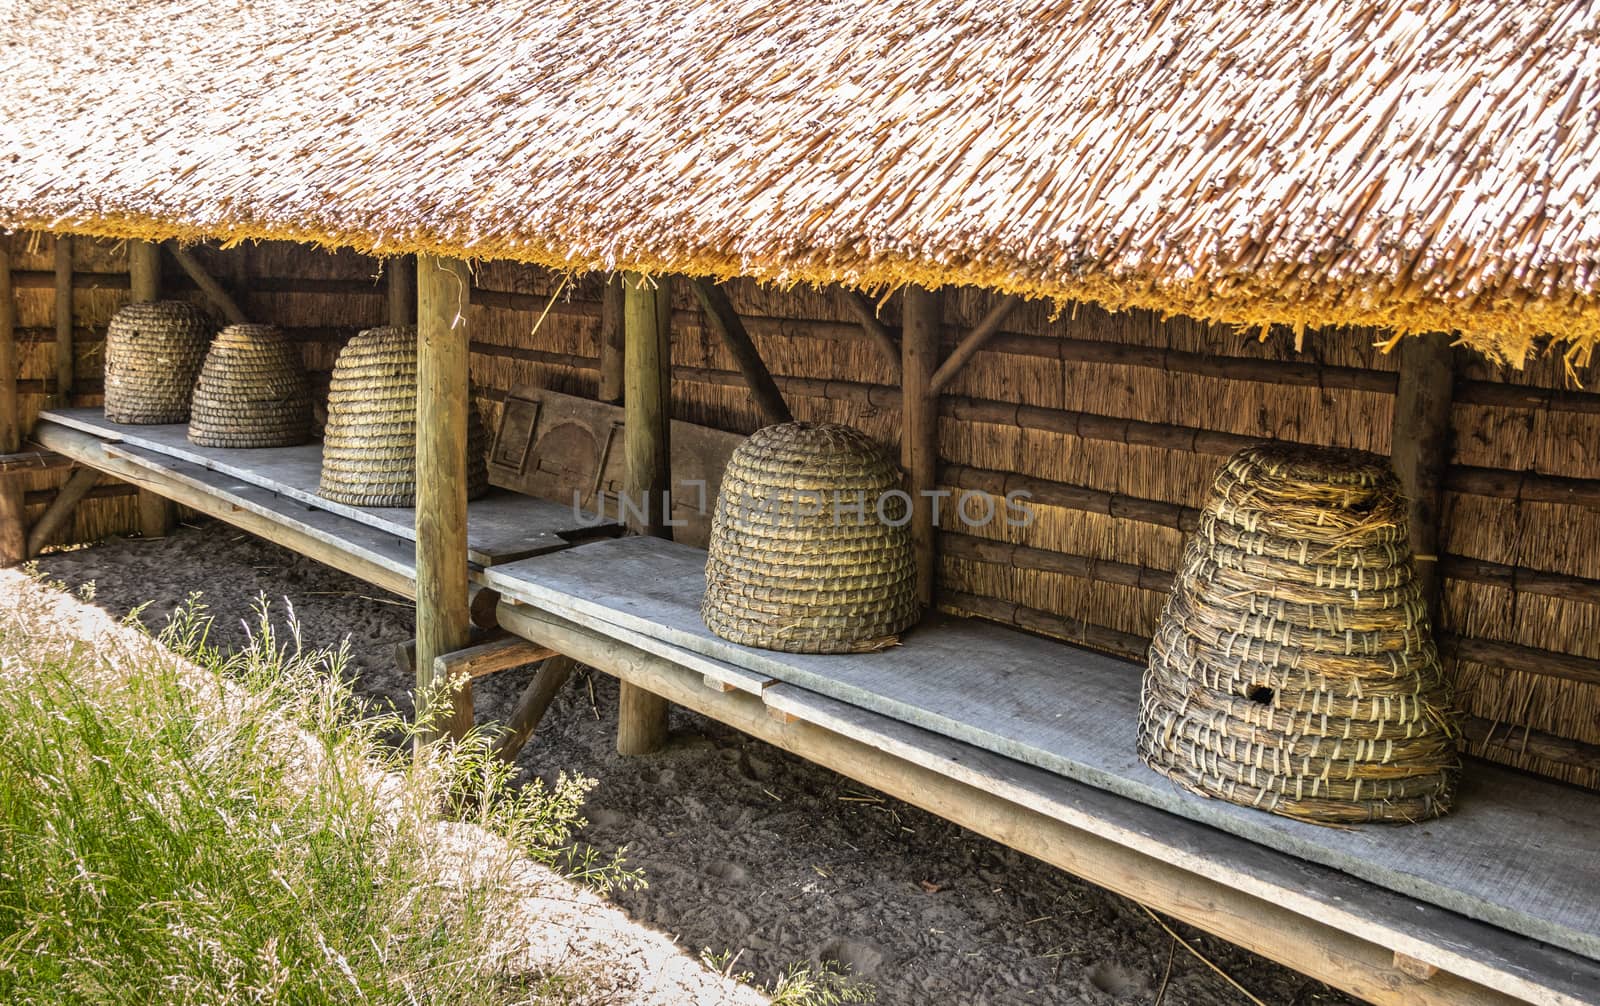 Bokrijk, Belgium - June 27, 2019: Line of classic large yellowish-brown straw beehives set under awning.